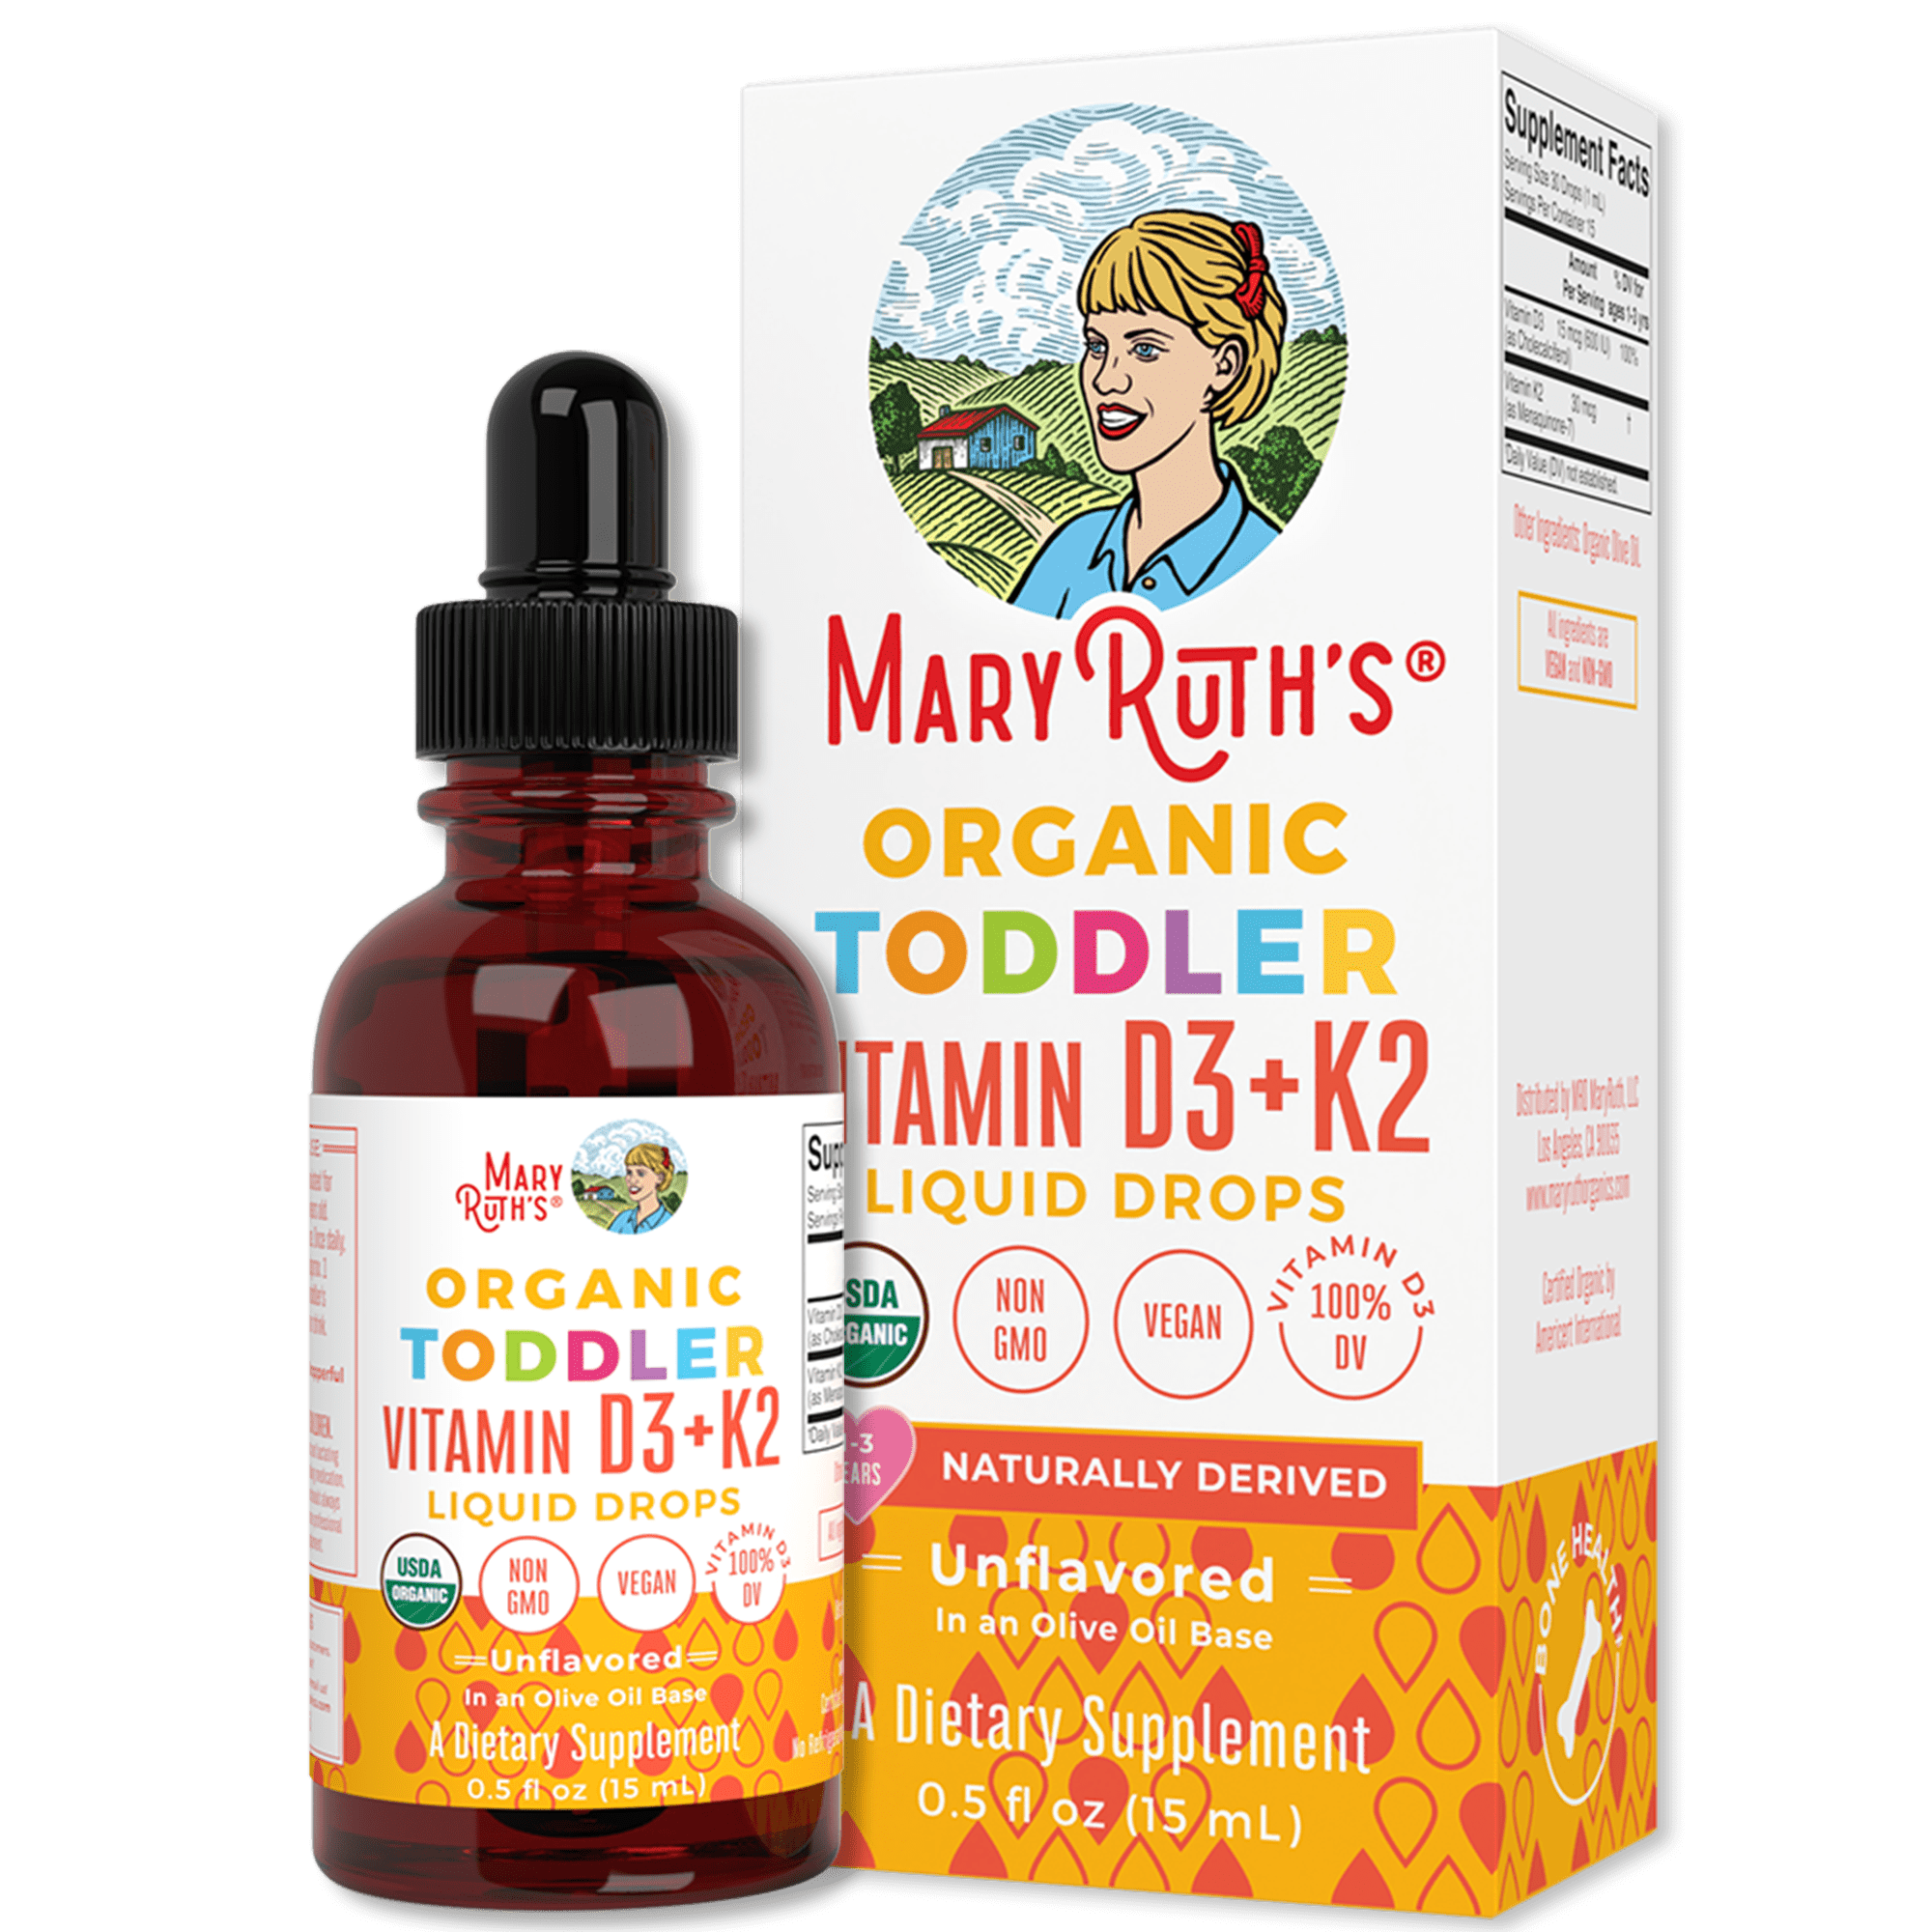 MaryRuth's Organic Toddler Vitamin D3+K2 Liquid Drops, 0.5 fl oz, Calcium Supplement